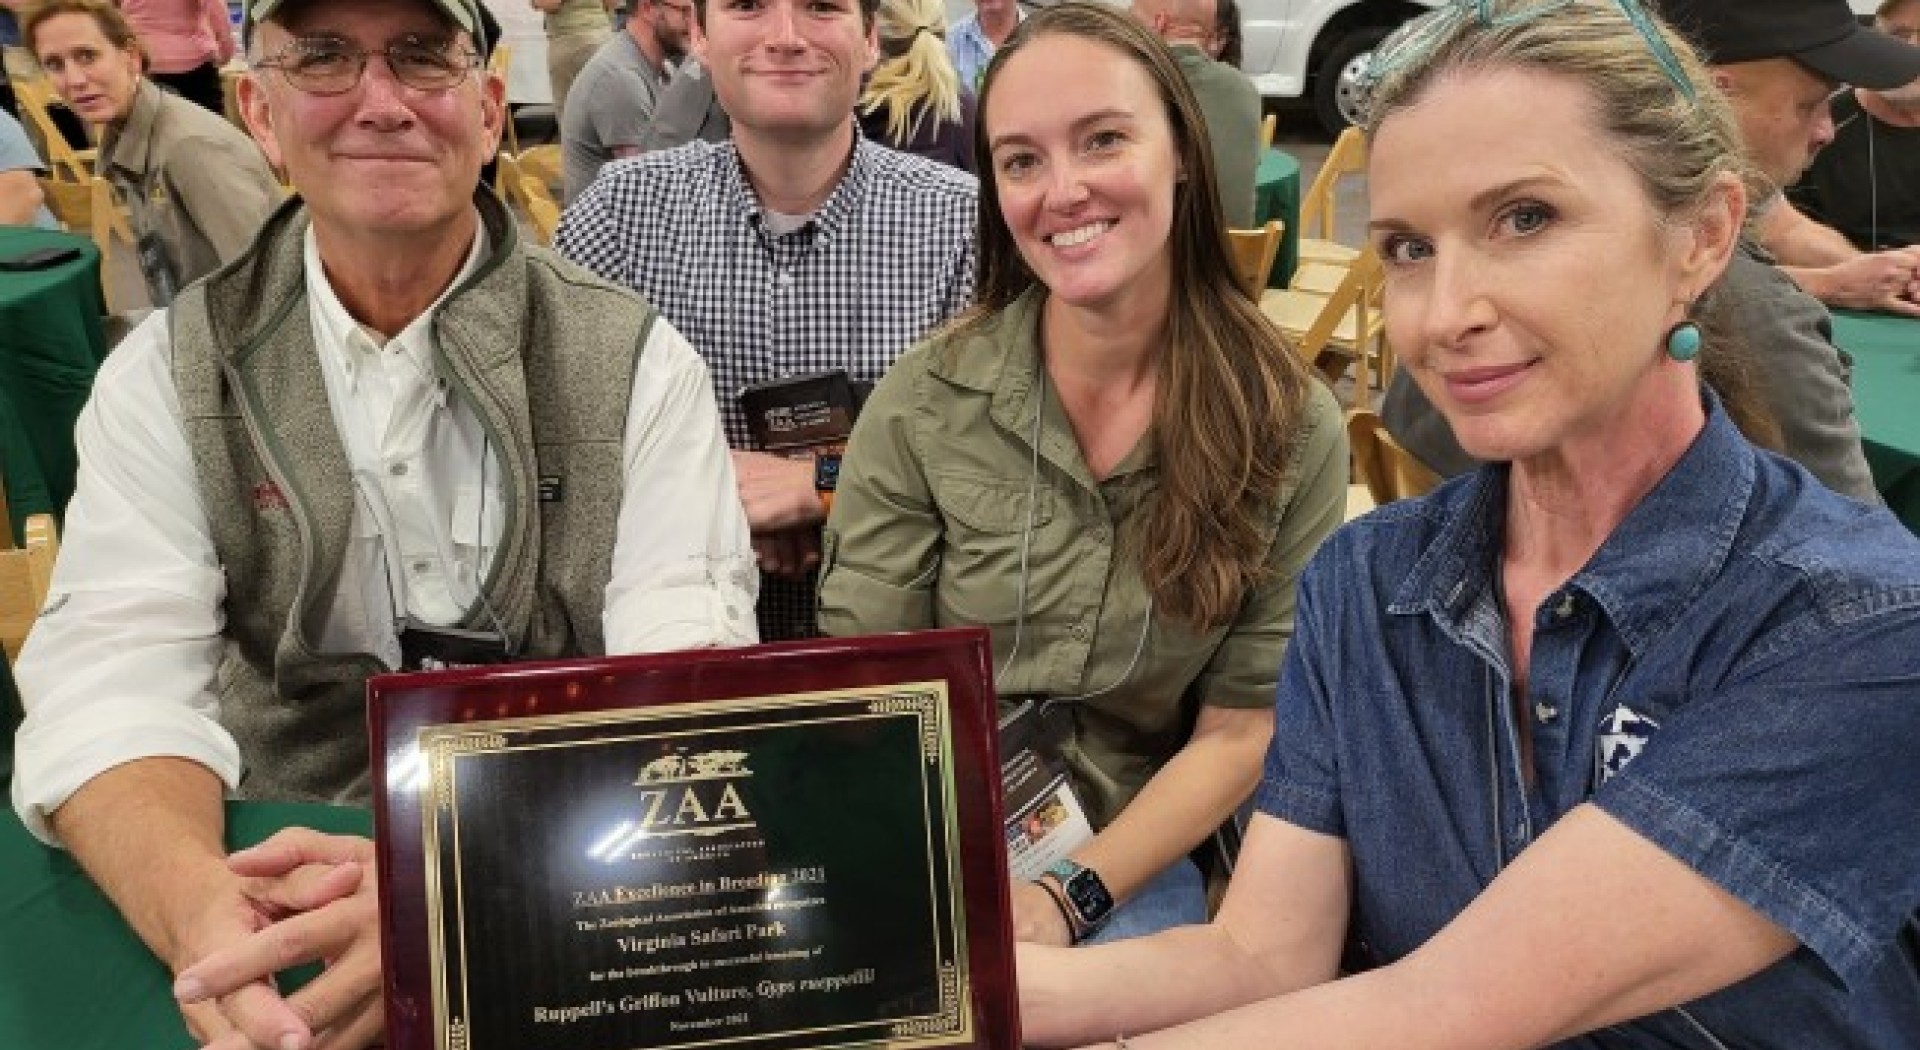 Virginia Safari Park Recognized by ZAA for Excellence in Breeding